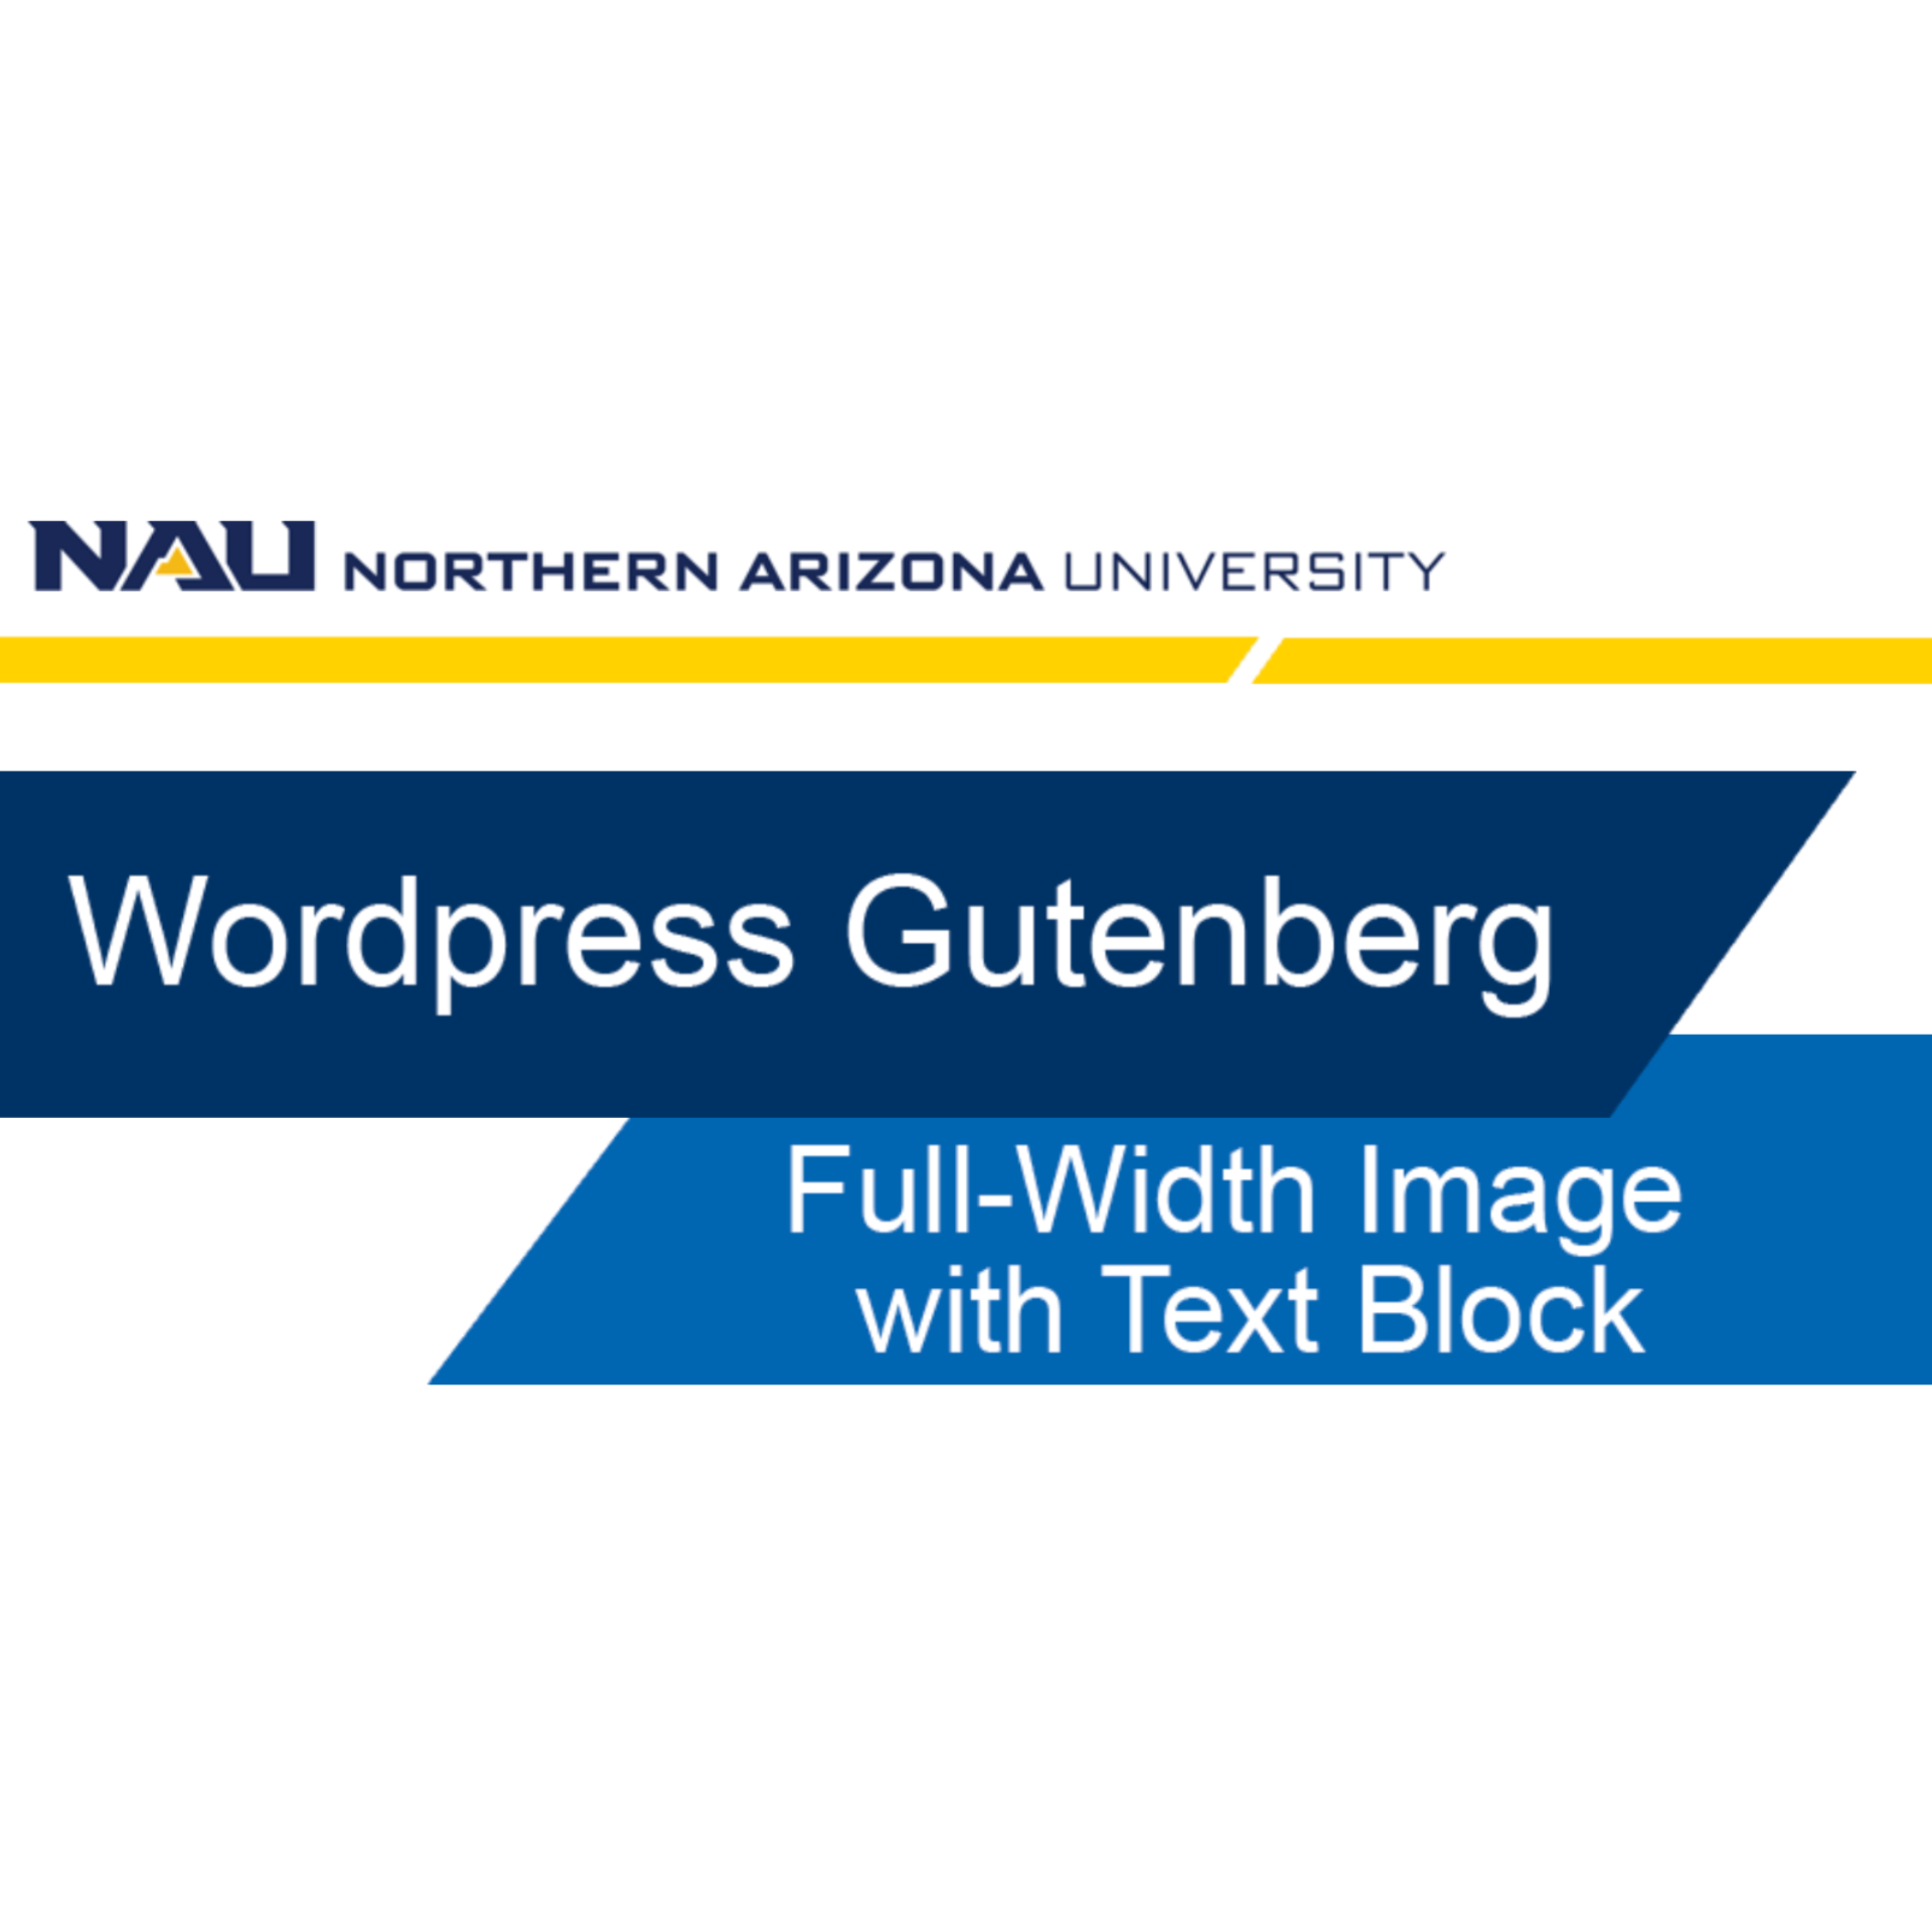 Thumbnail image of the Northern Arizona University WordPress Gutenberg tutorial start page, titled 'Full-Width Image with Text Block'.